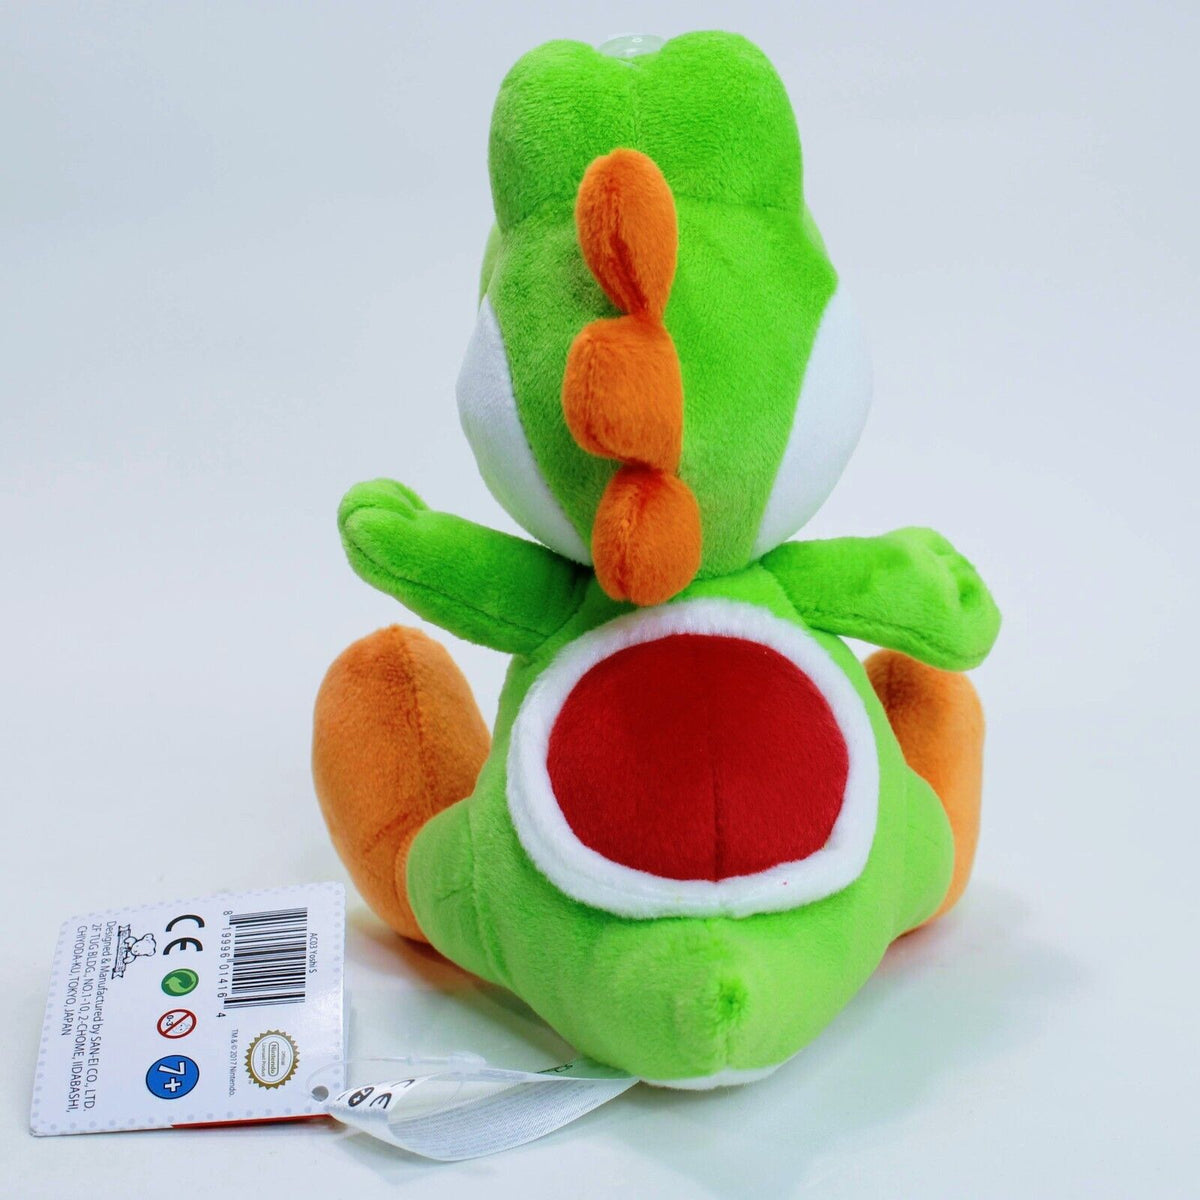 Sanei- Yoshi Plush Toy 75YOS063, Green